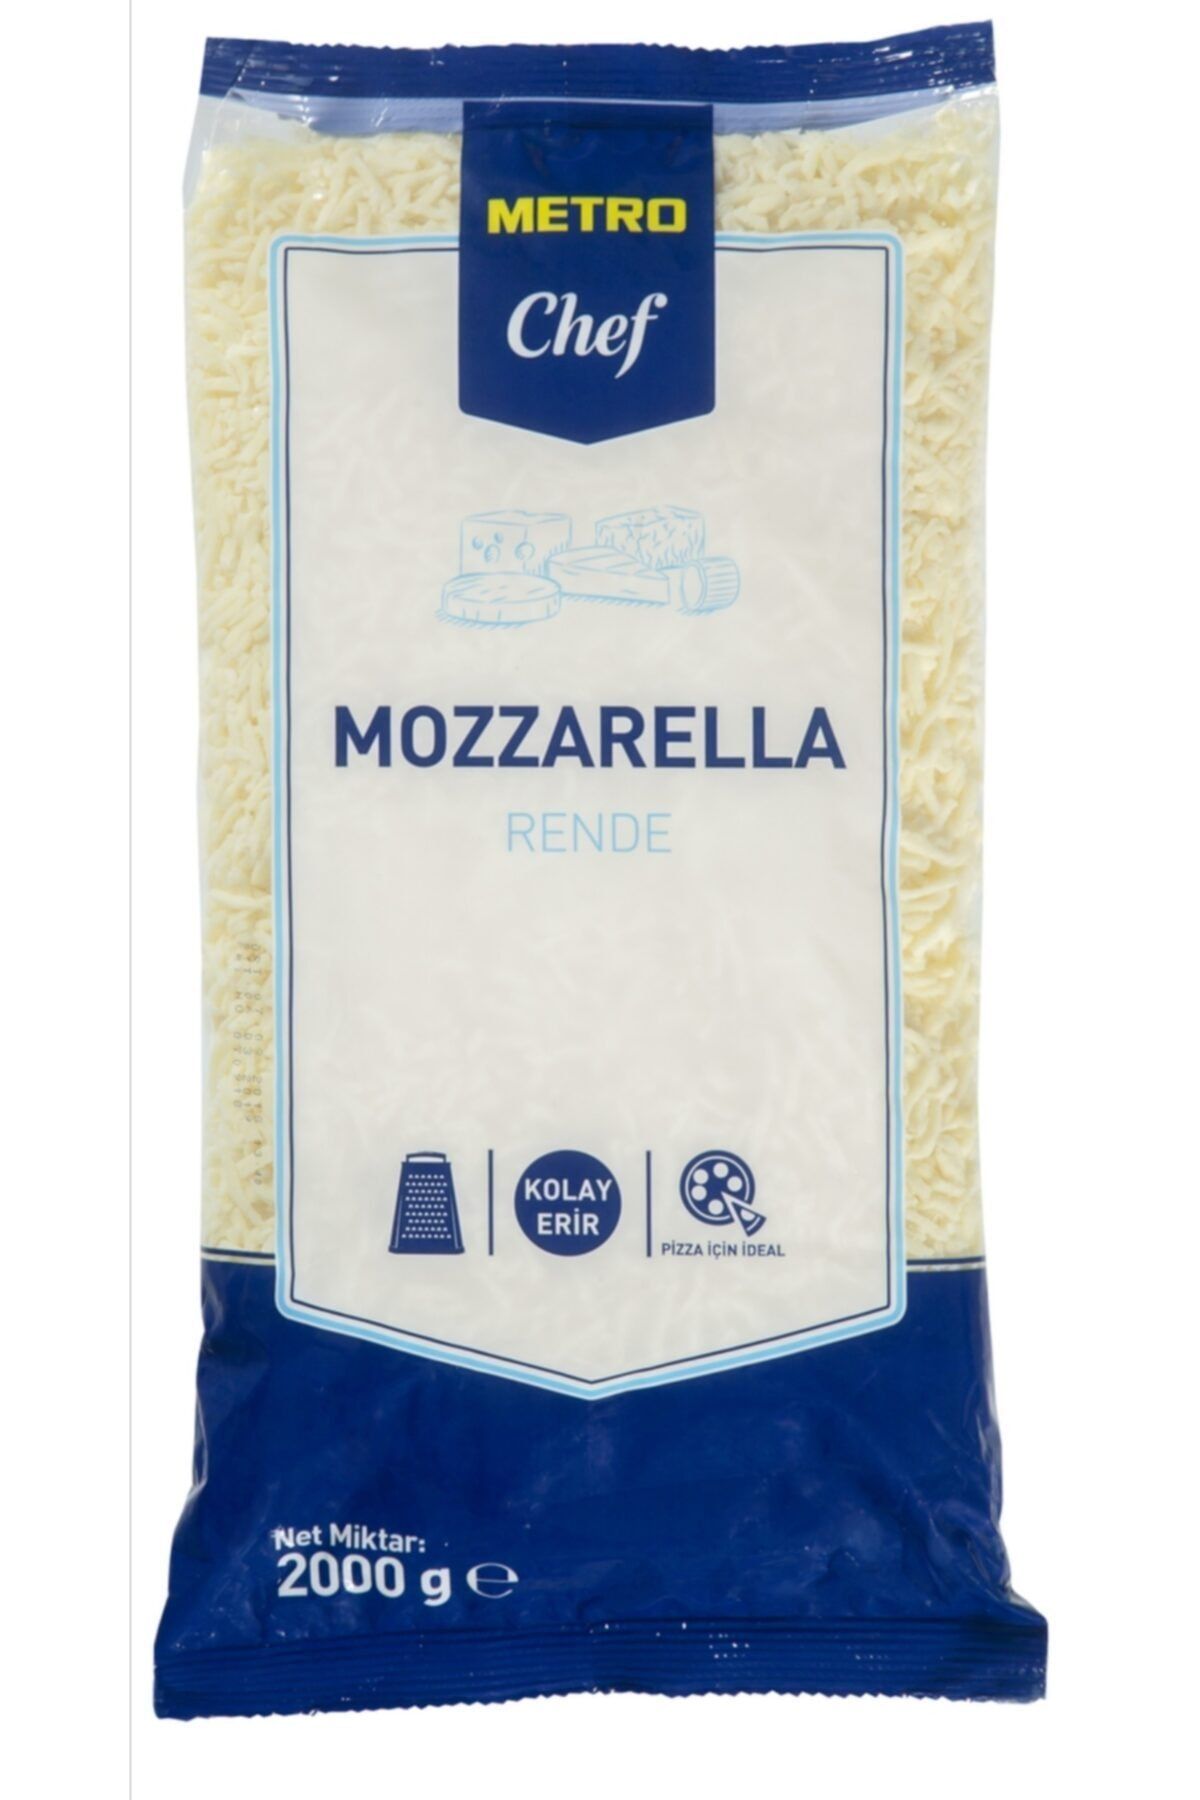 Metro Chef Mozzarella (rende) 2000 G